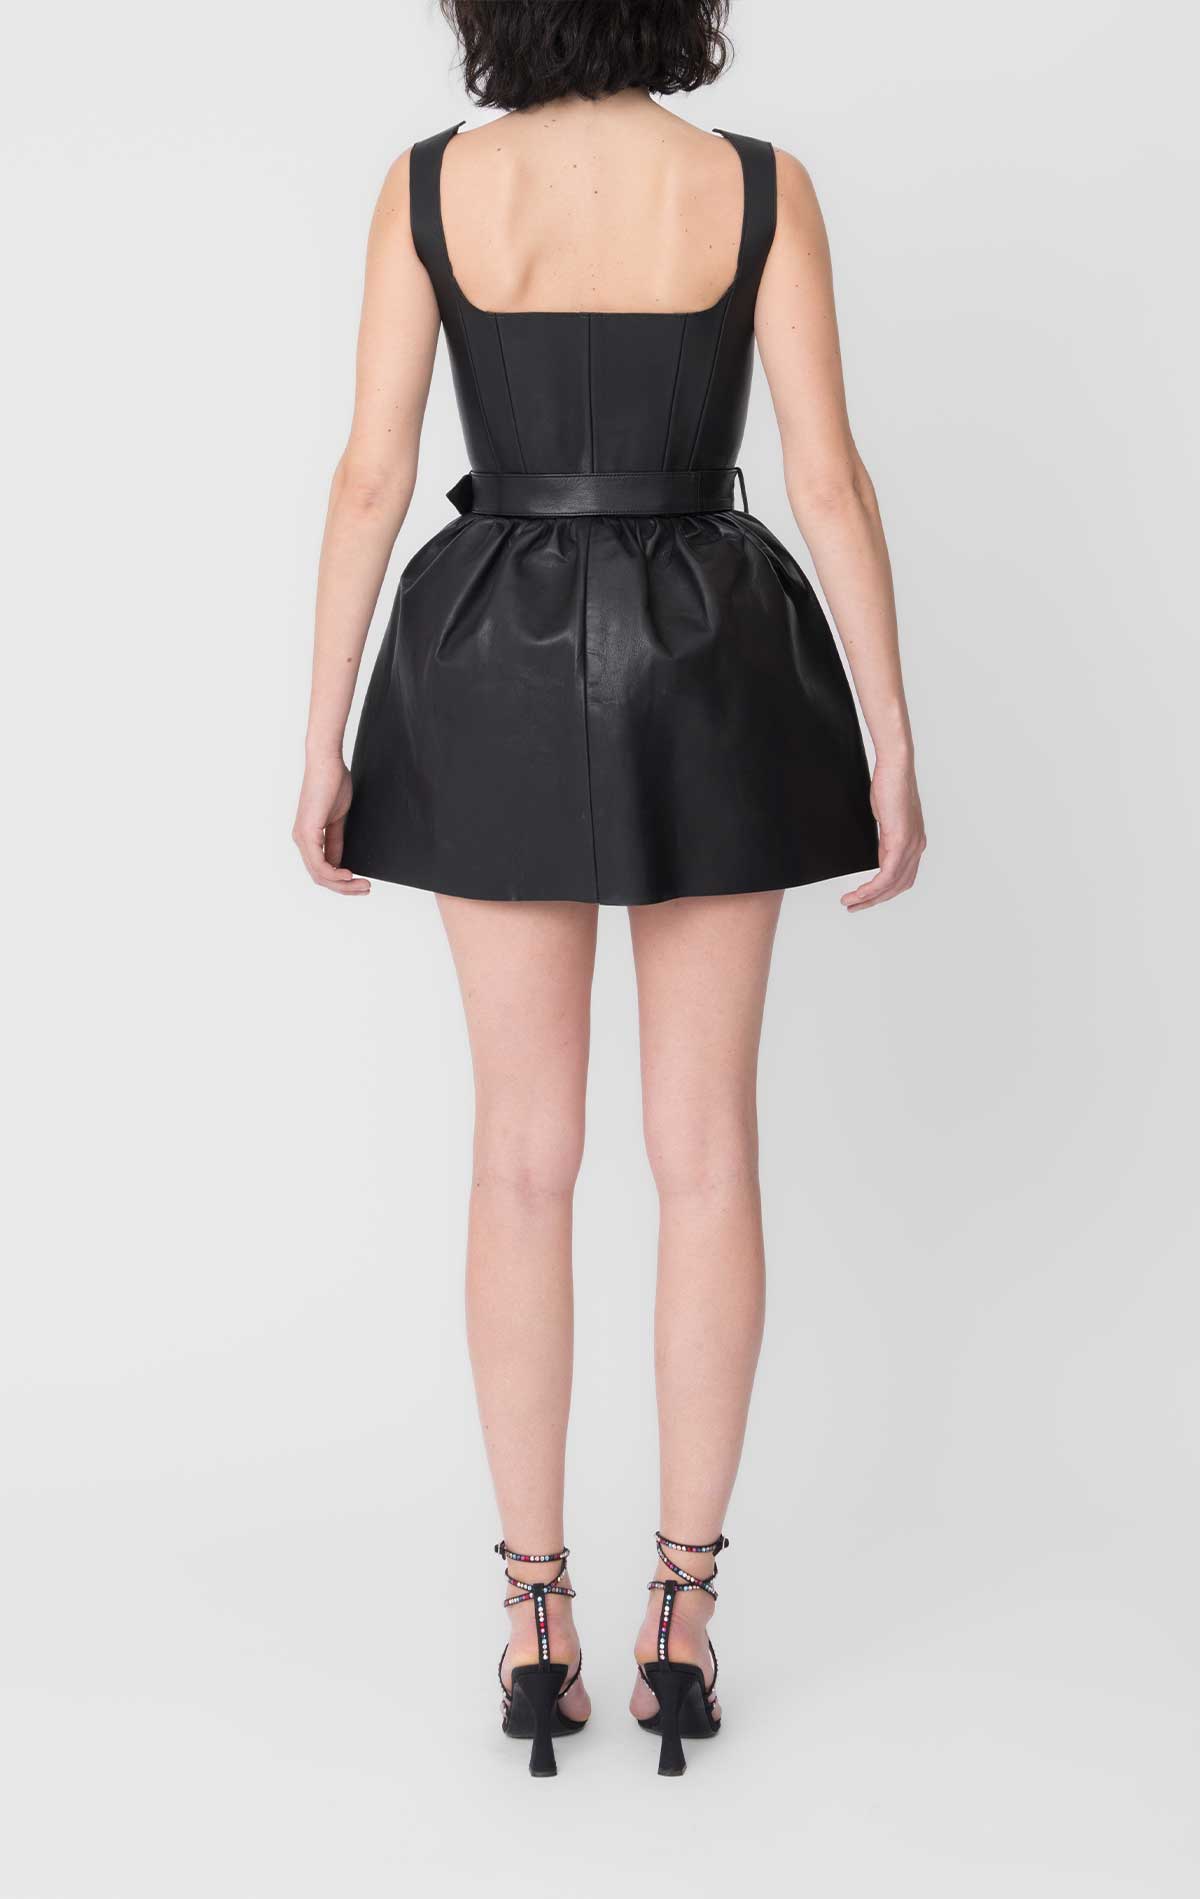 Roxy Dress Black Leather - Silvia Astore